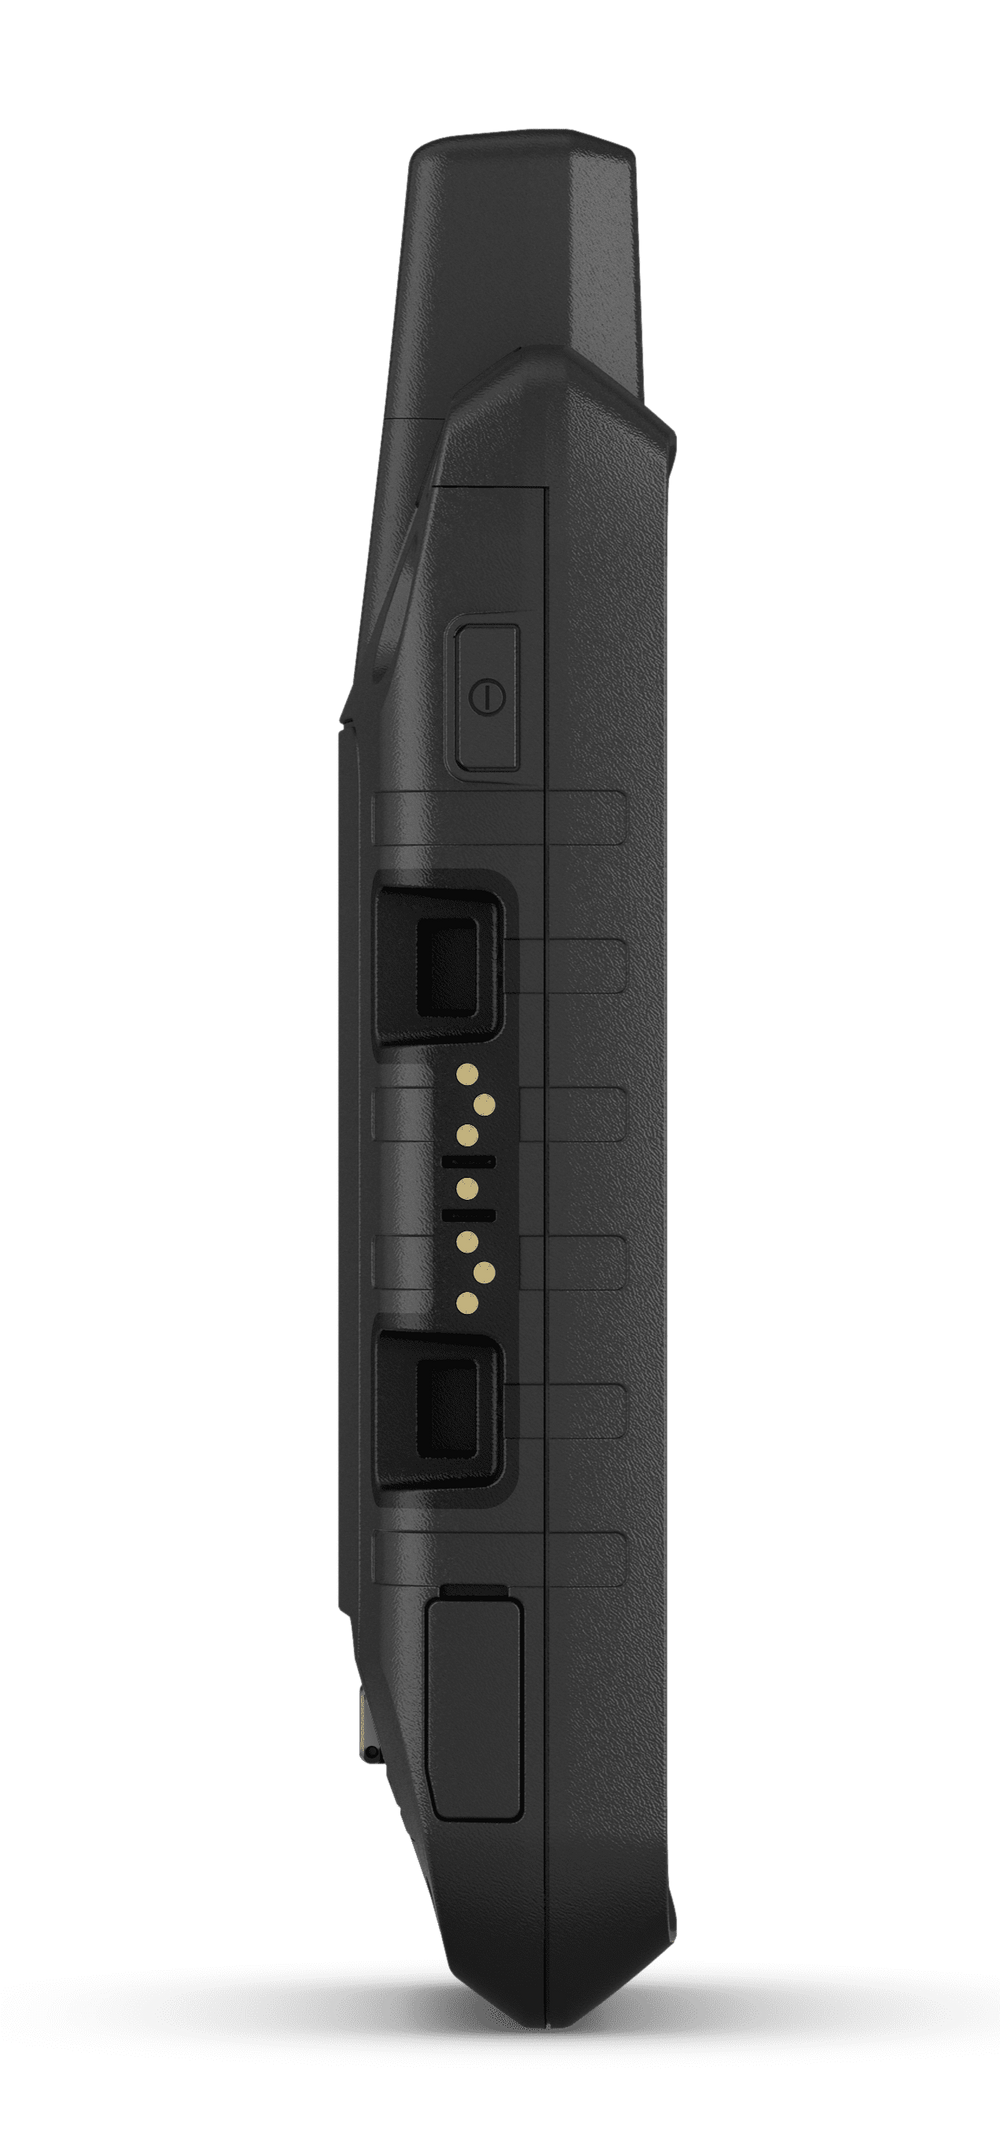 Garmin MONTANA 750i | S4 Supplies